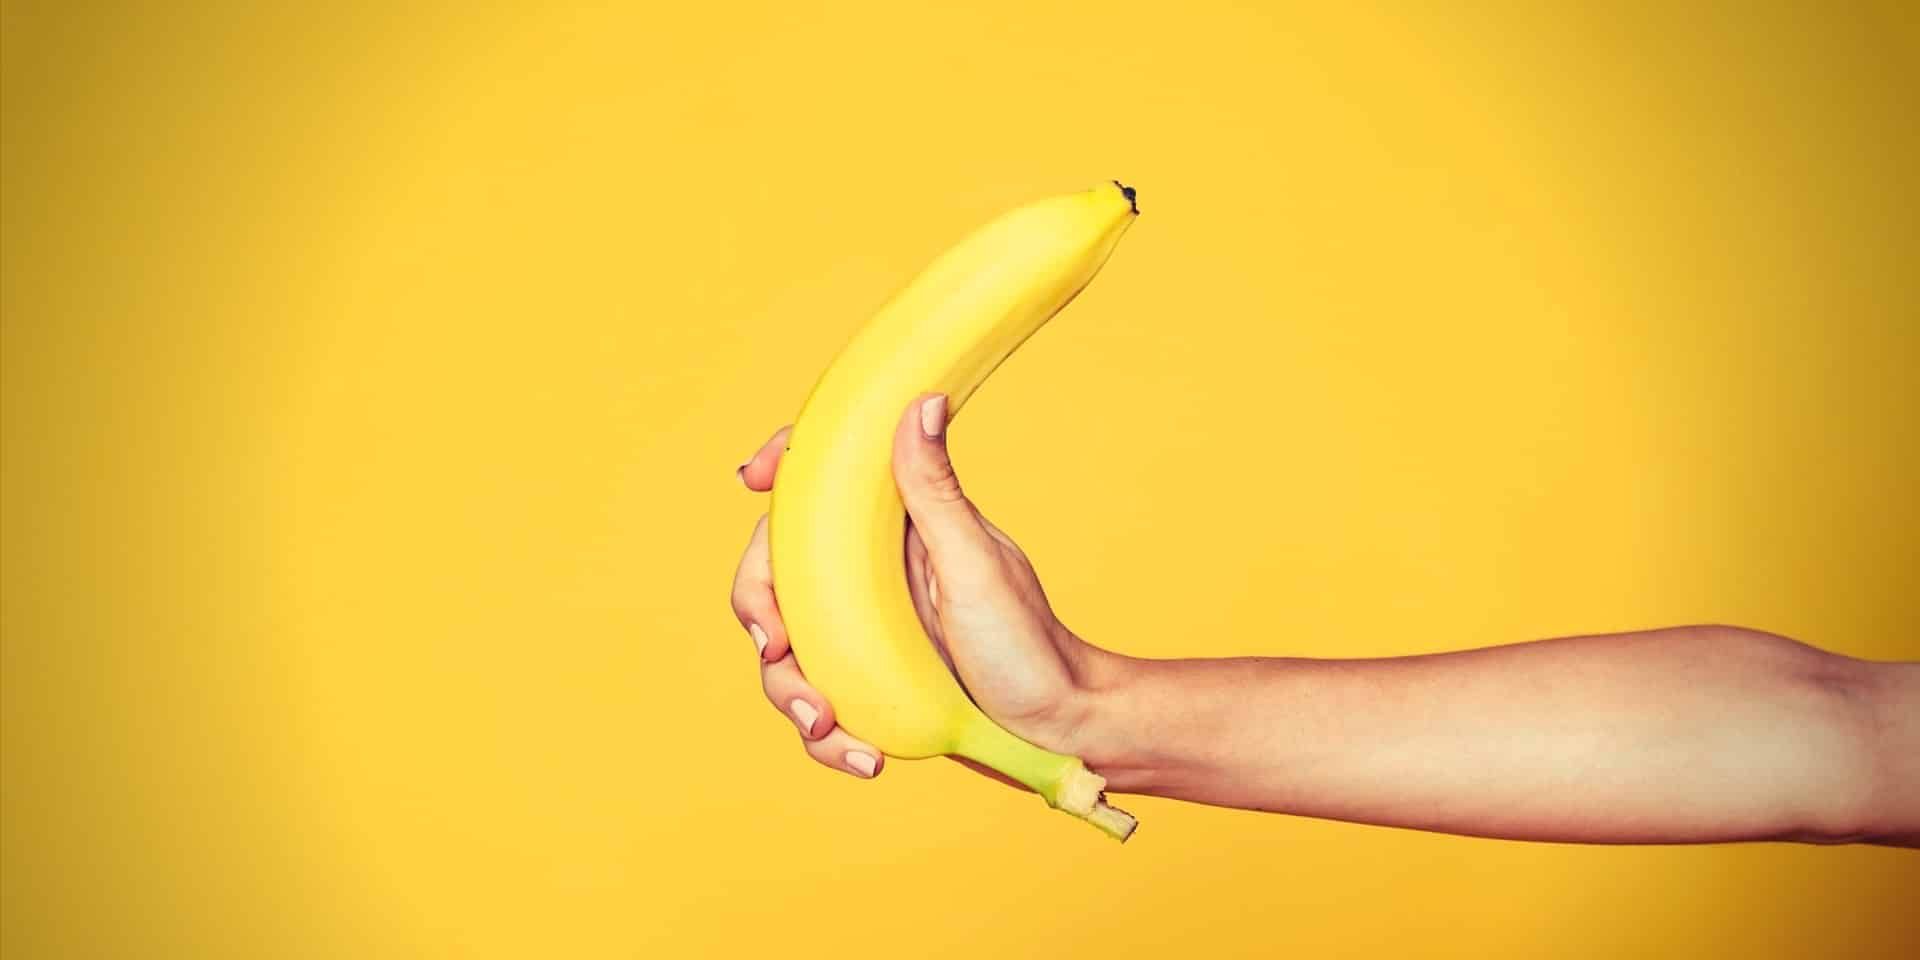 Instant Erection female hand holding banana